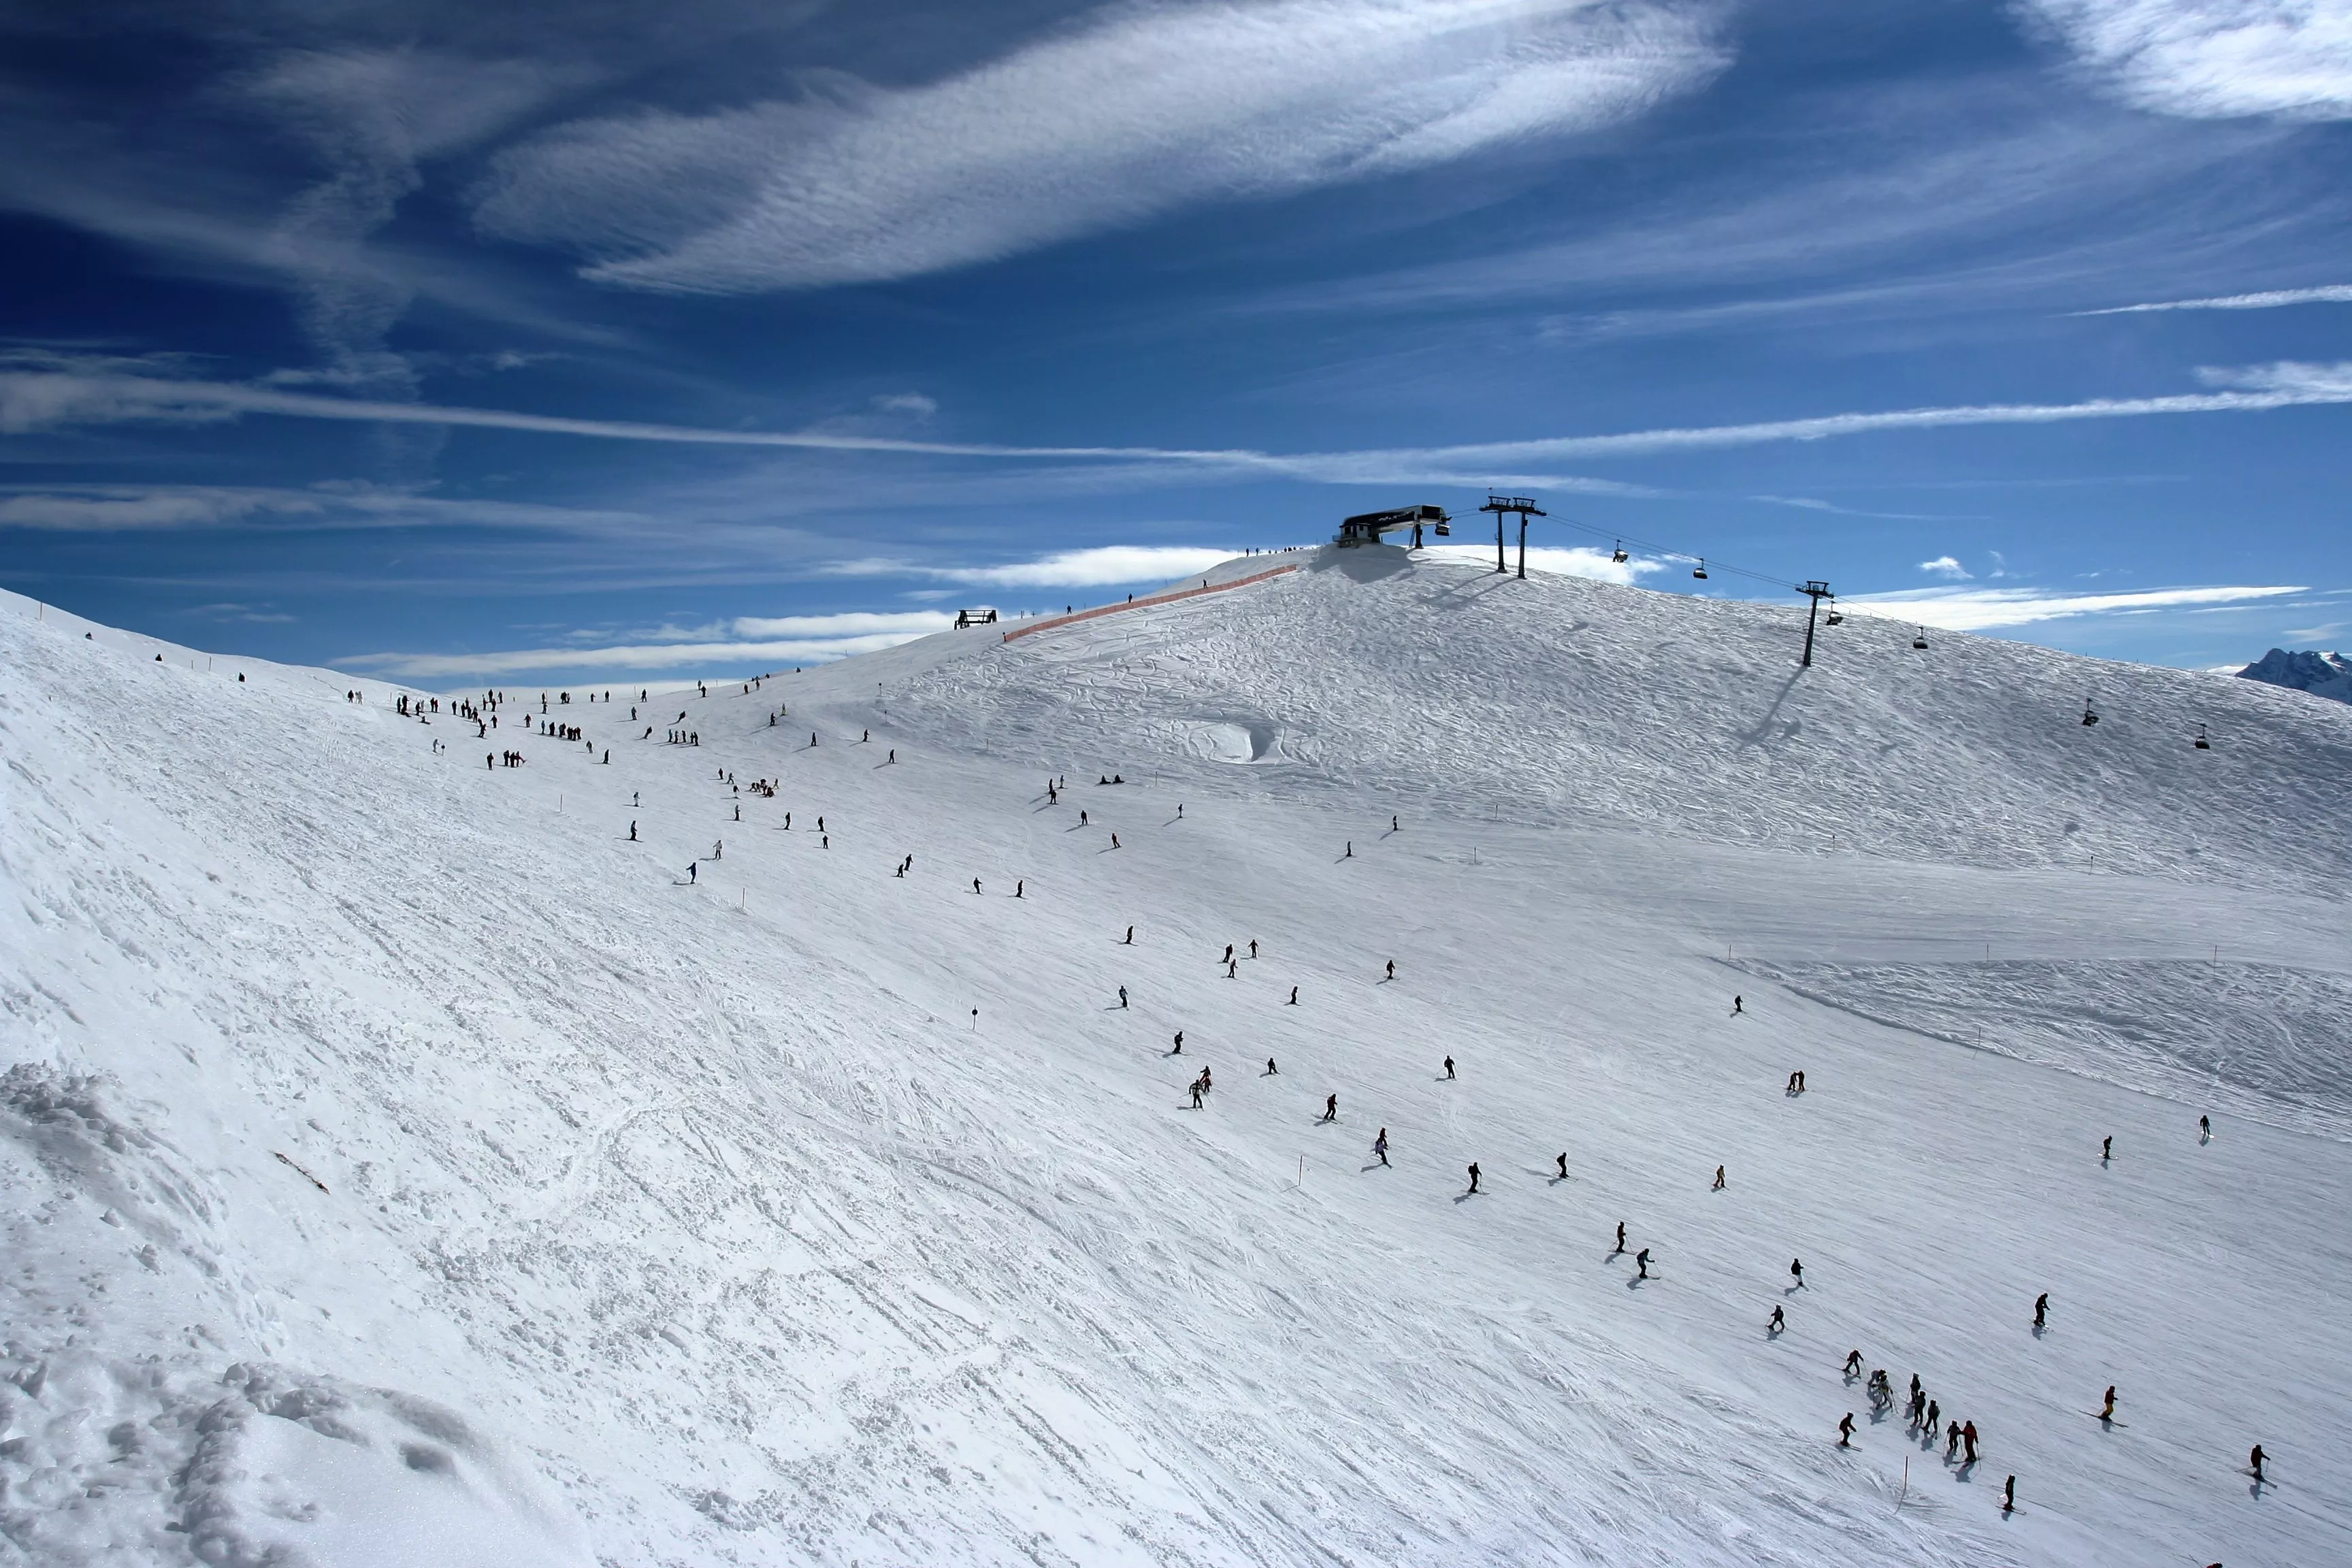 Hedelands Skicenter in Denmark, Europe | Snowboarding,Skiing - Rated 0.8